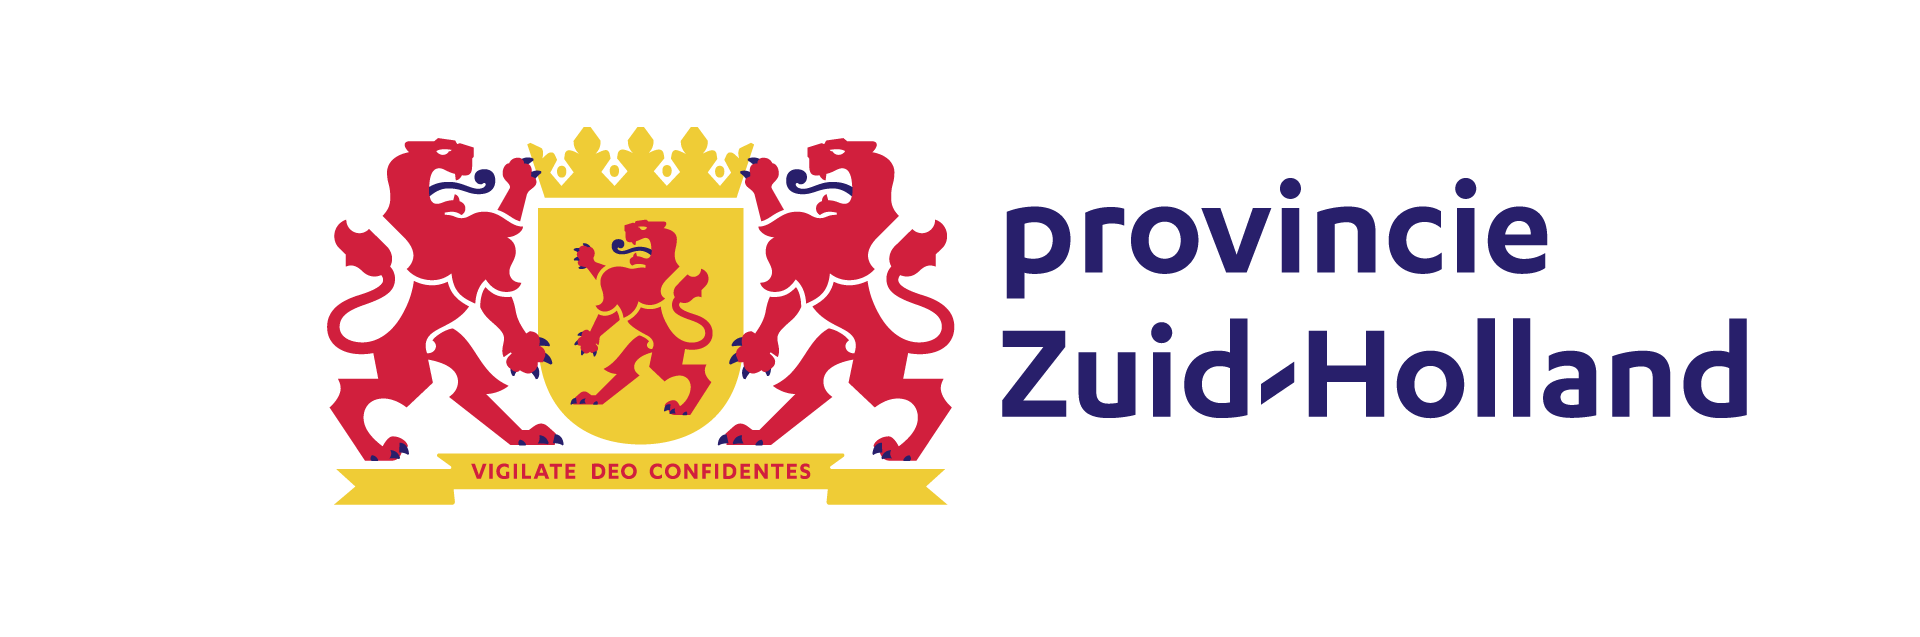 Provincie Zuid-Holland _ CIRCO Hub Zuid Holland